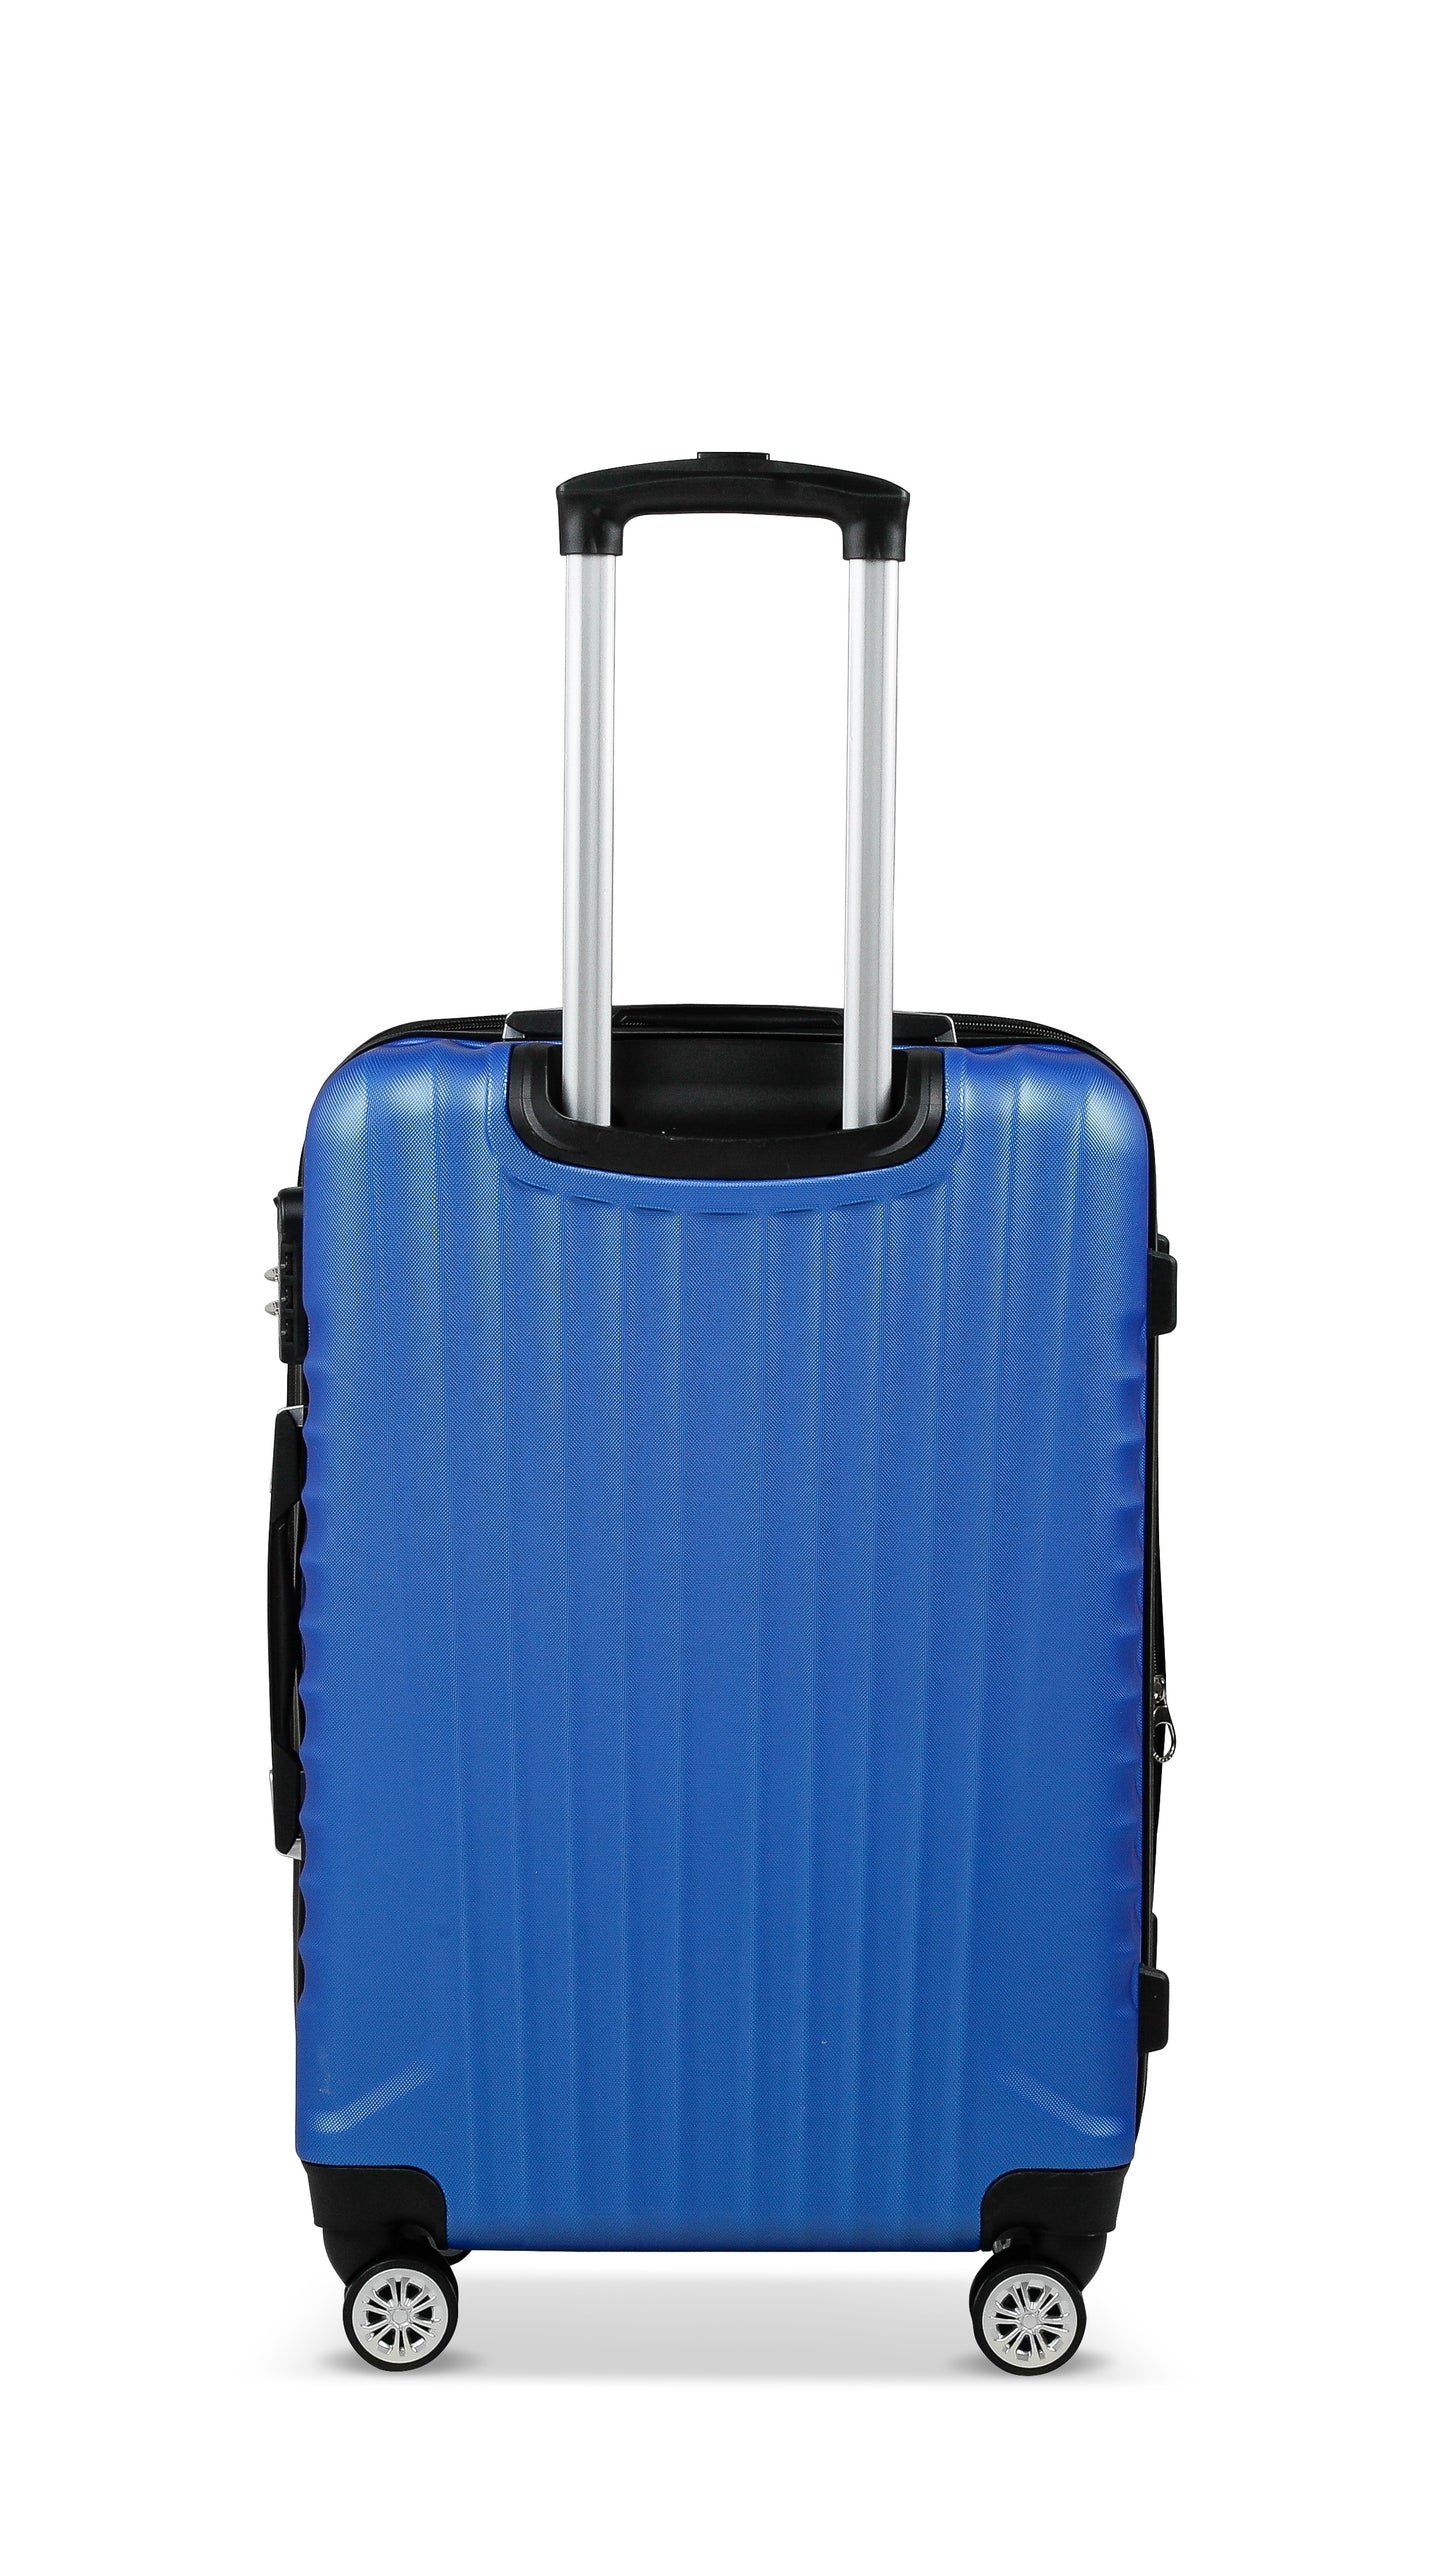 Valise Travel One Bleu Taille Moyenne 66cm extensible vue de dos